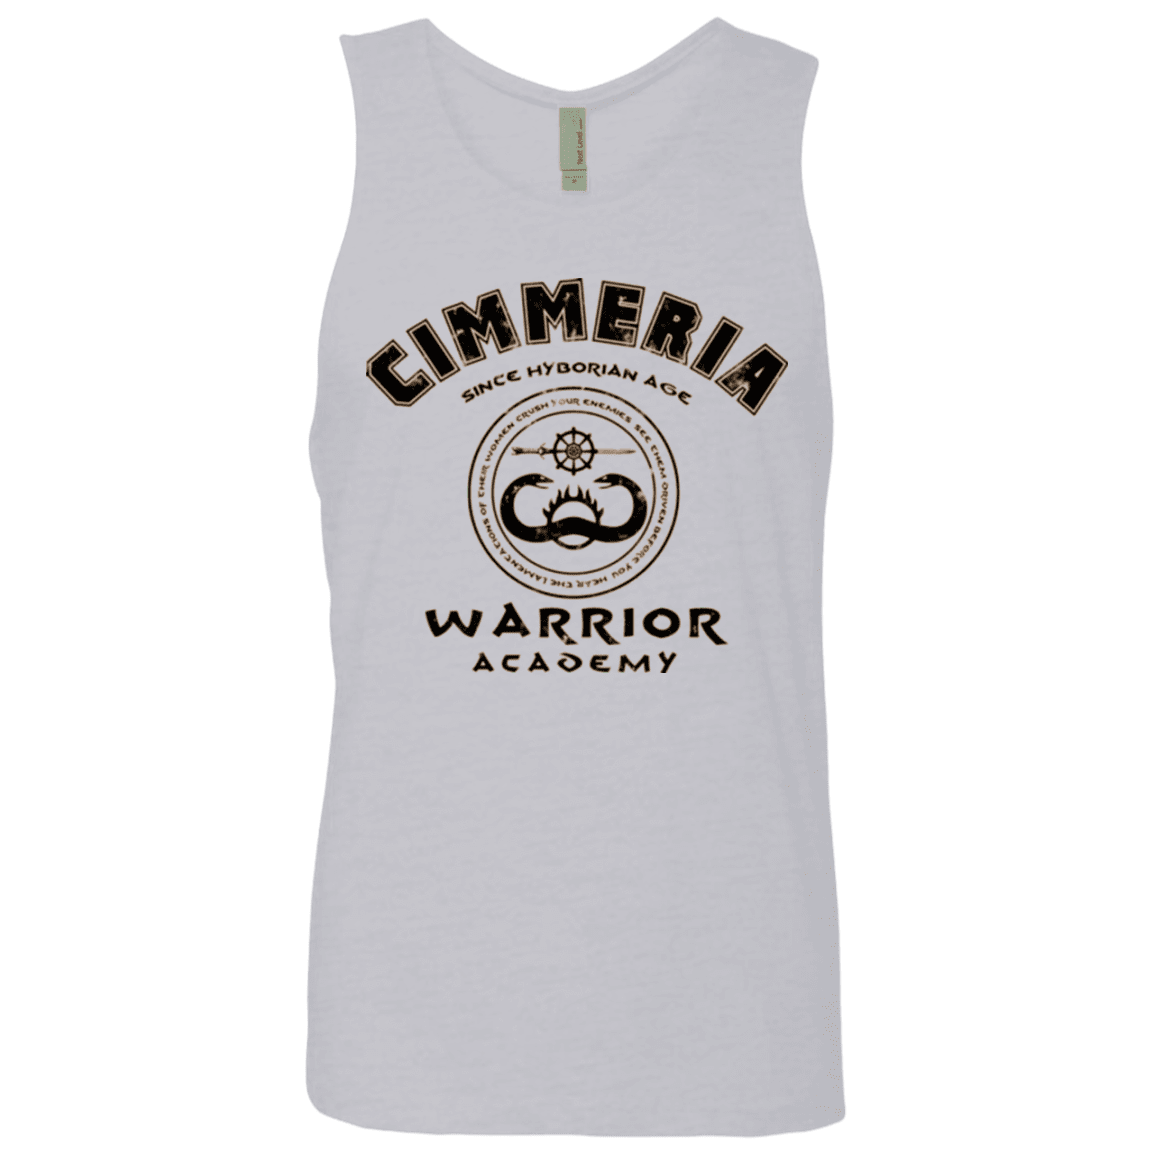 T-Shirts Heather Grey / Small Crimmeria Warrior academy Men's Premium Tank Top